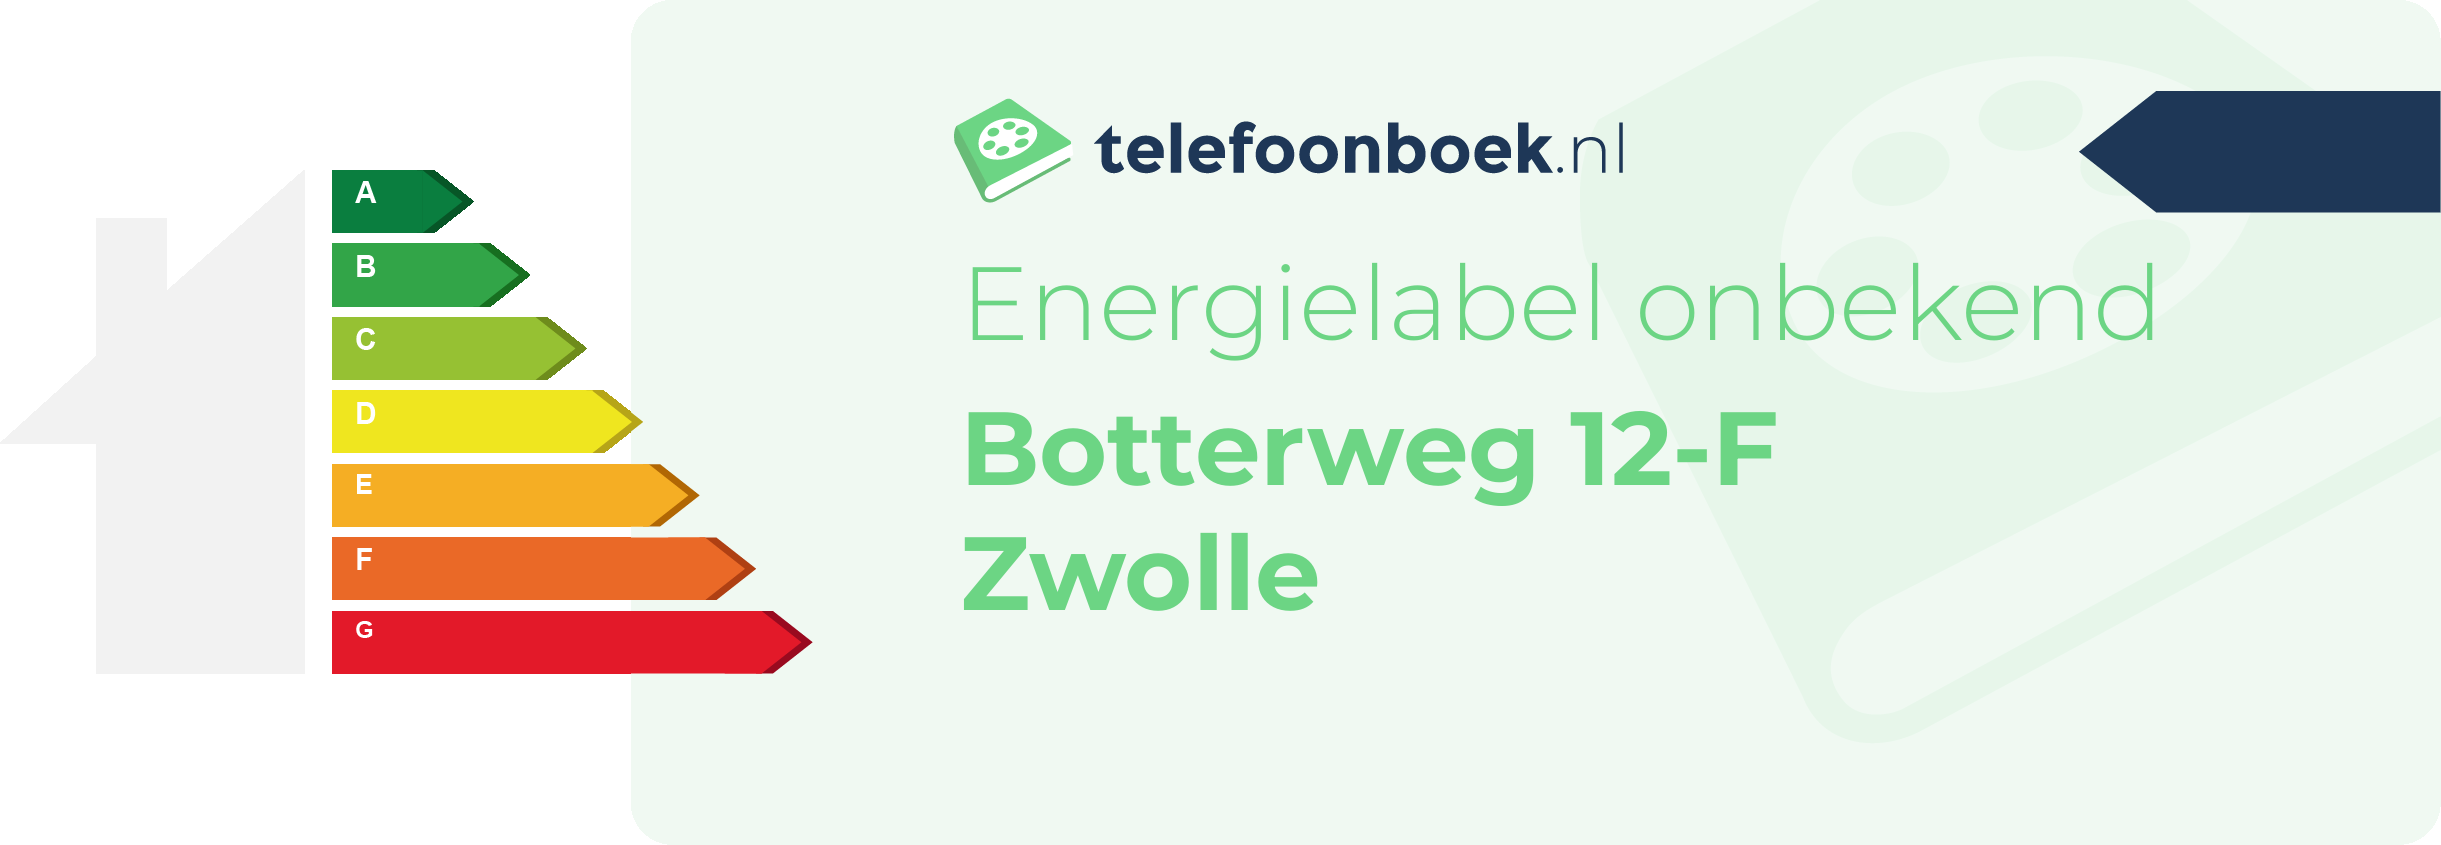 Energielabel Botterweg 12-F Zwolle